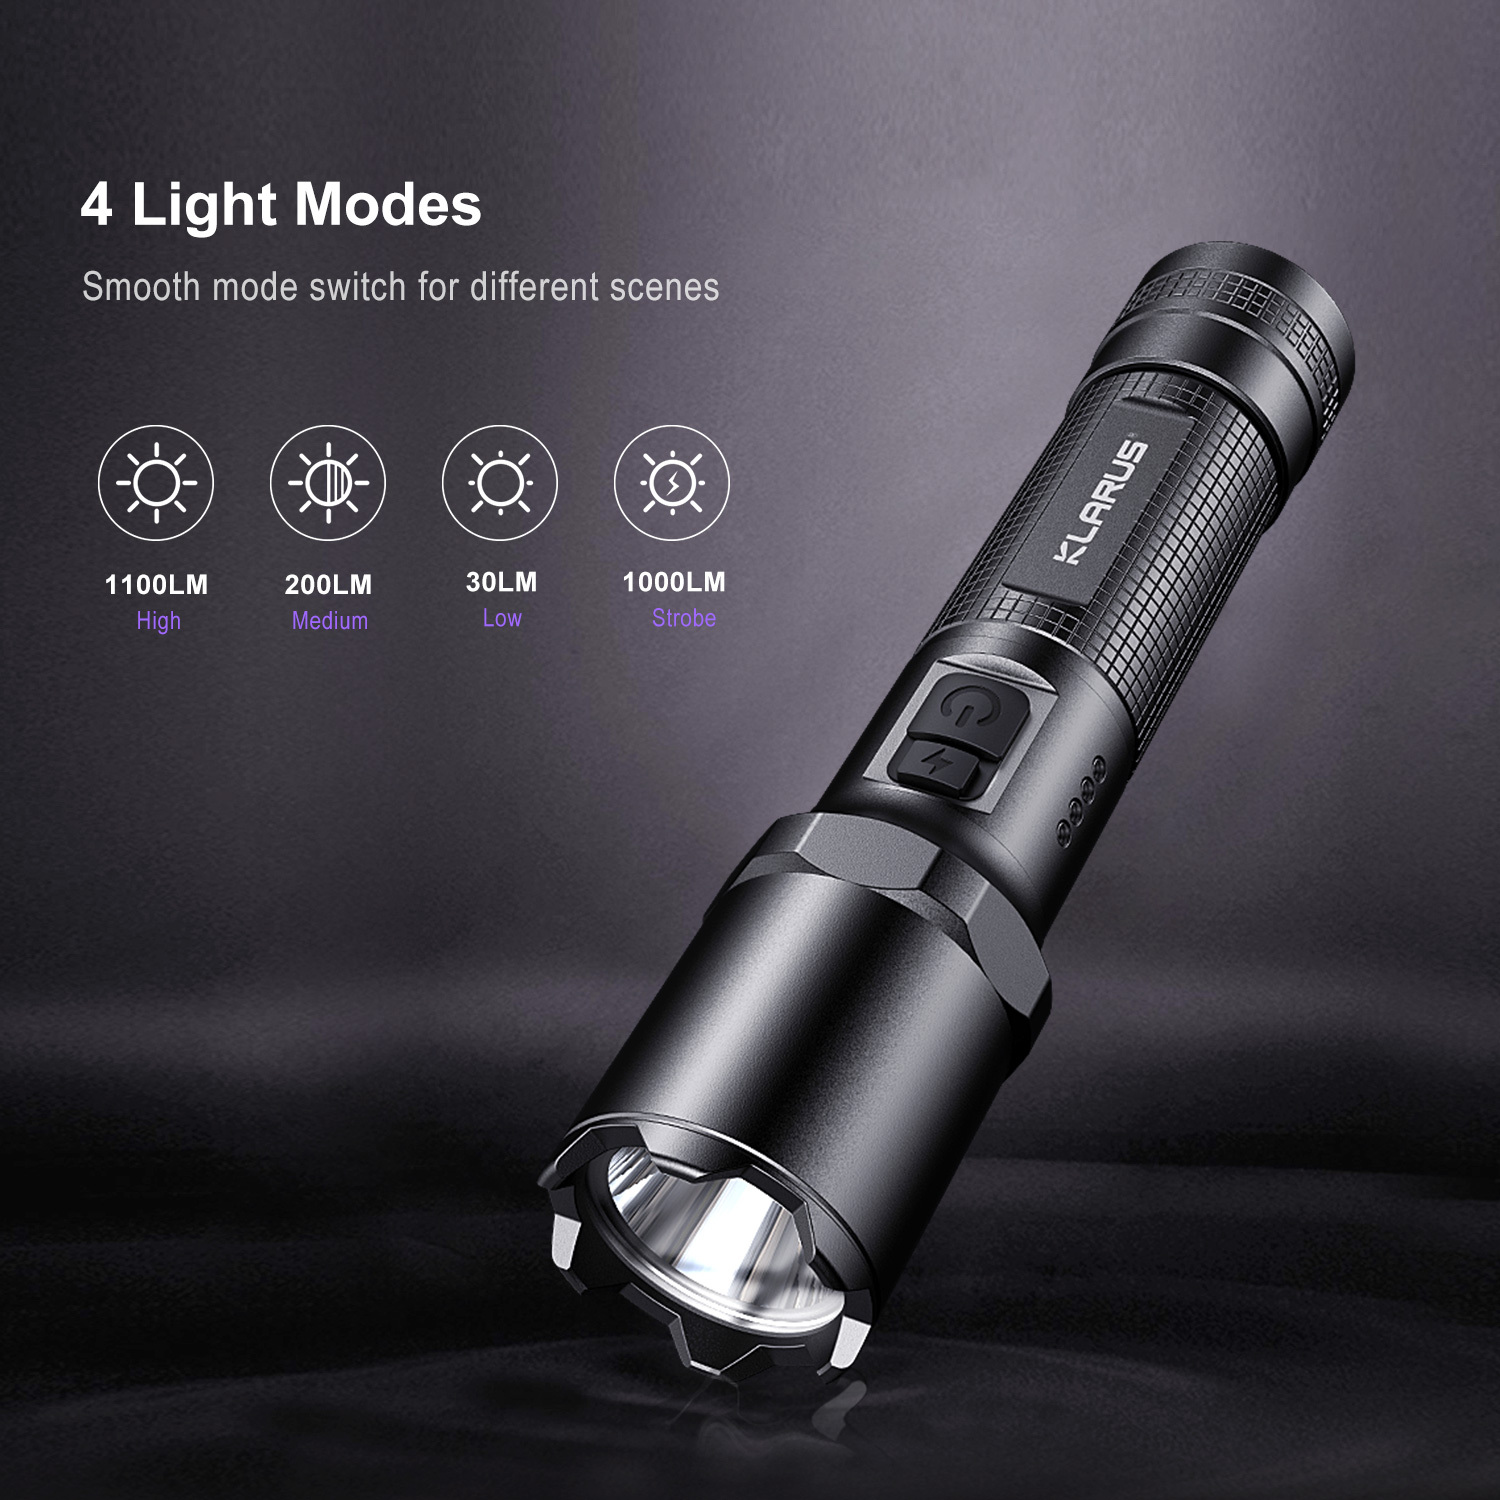 Klarus A1 USB Charge 10W LED 1100 Lumens Search Light